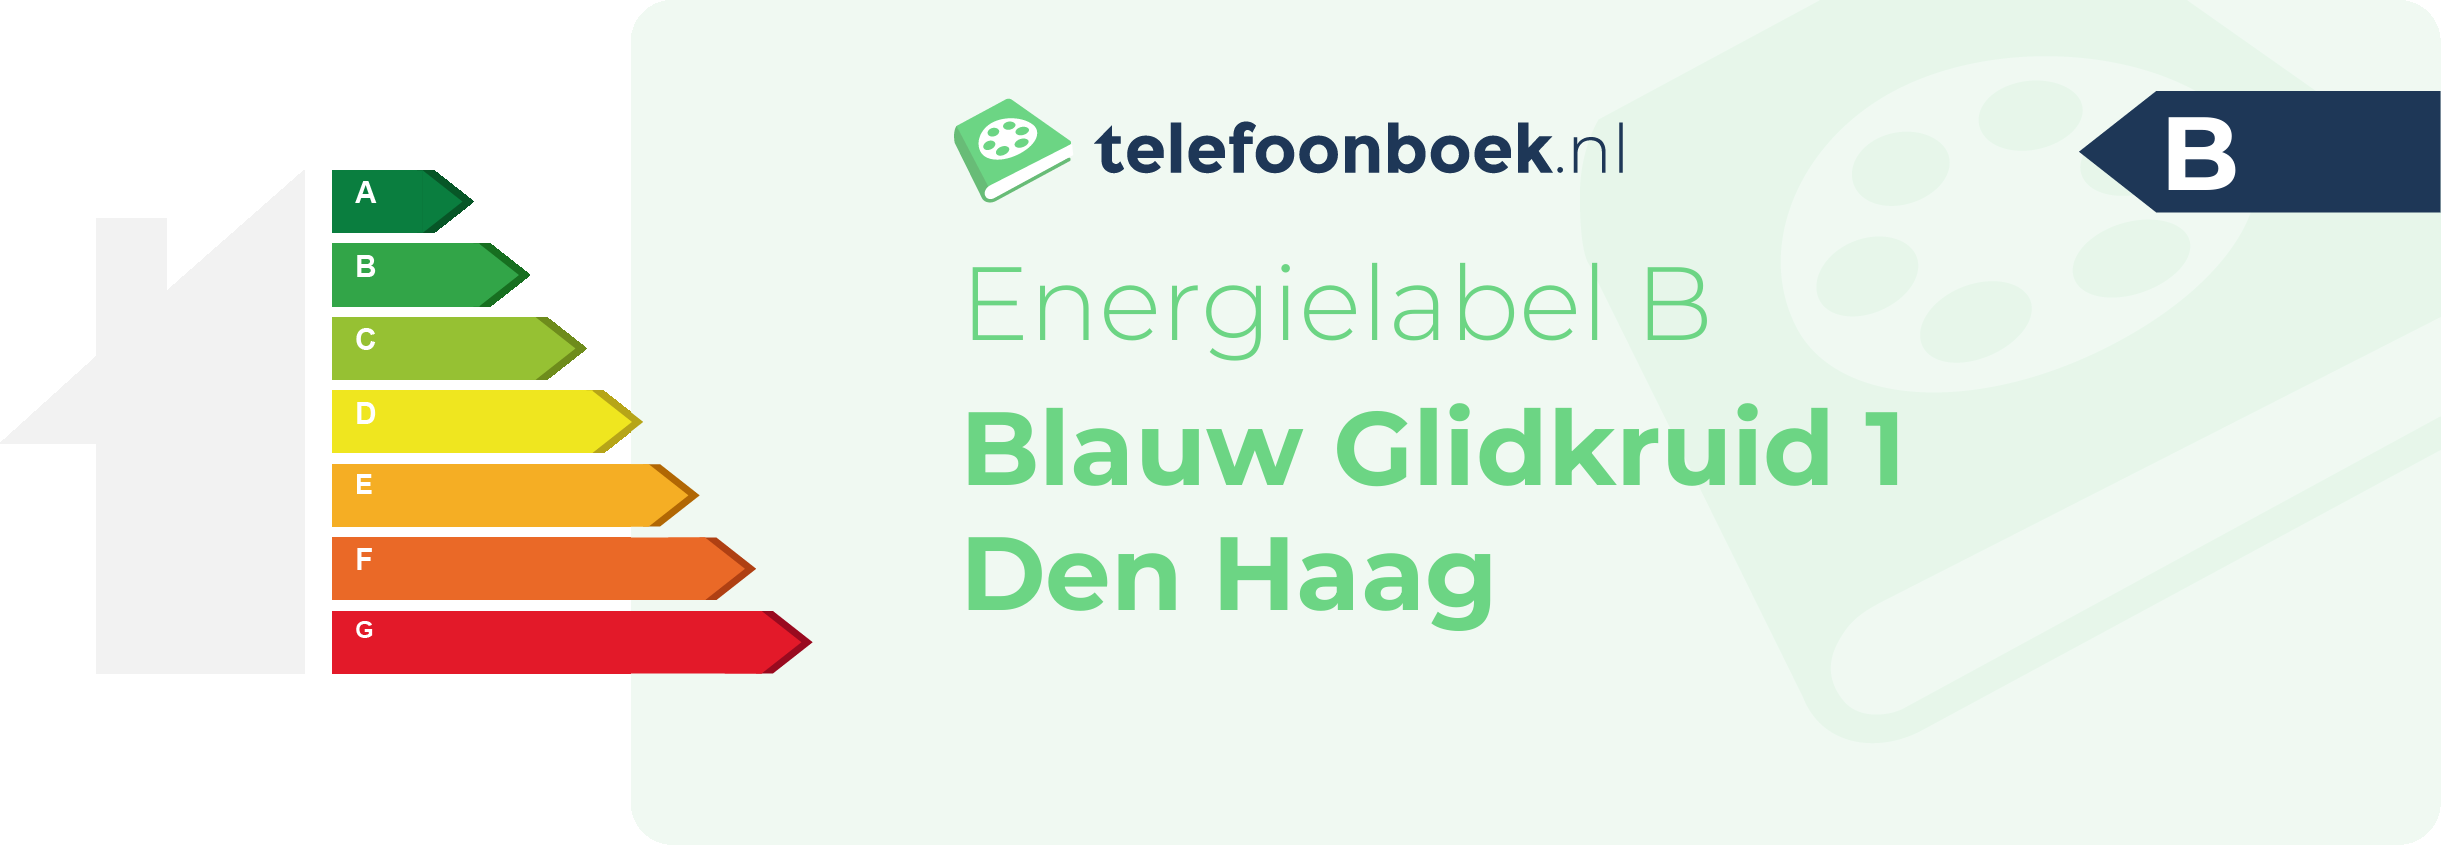 Energielabel Blauw Glidkruid 1 Den Haag